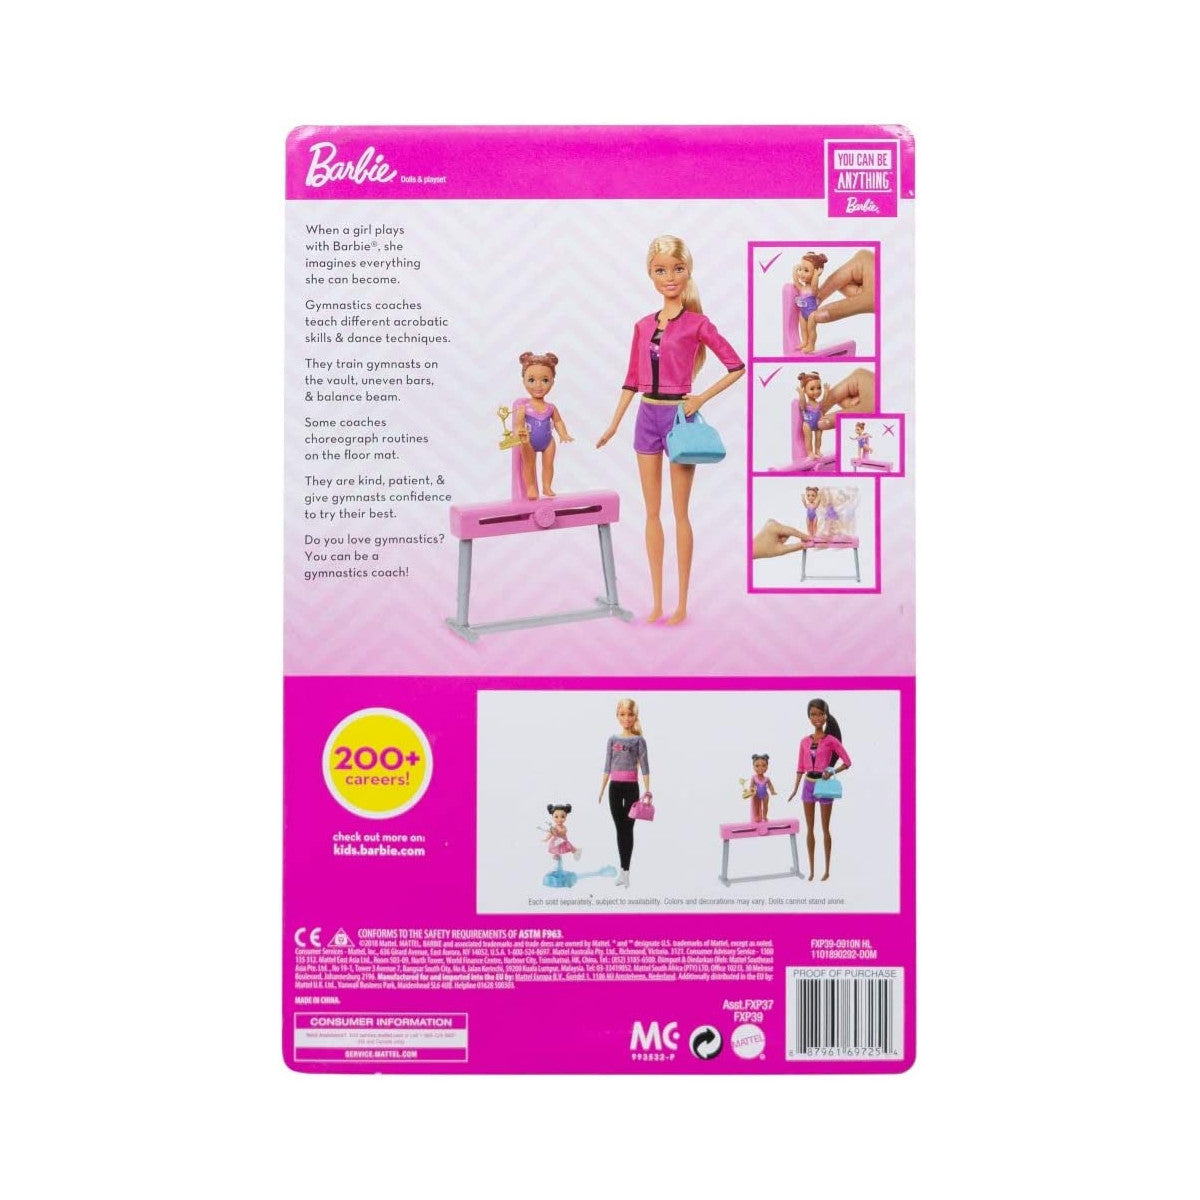 Barbie Careers Doll - Gymnastics Coach